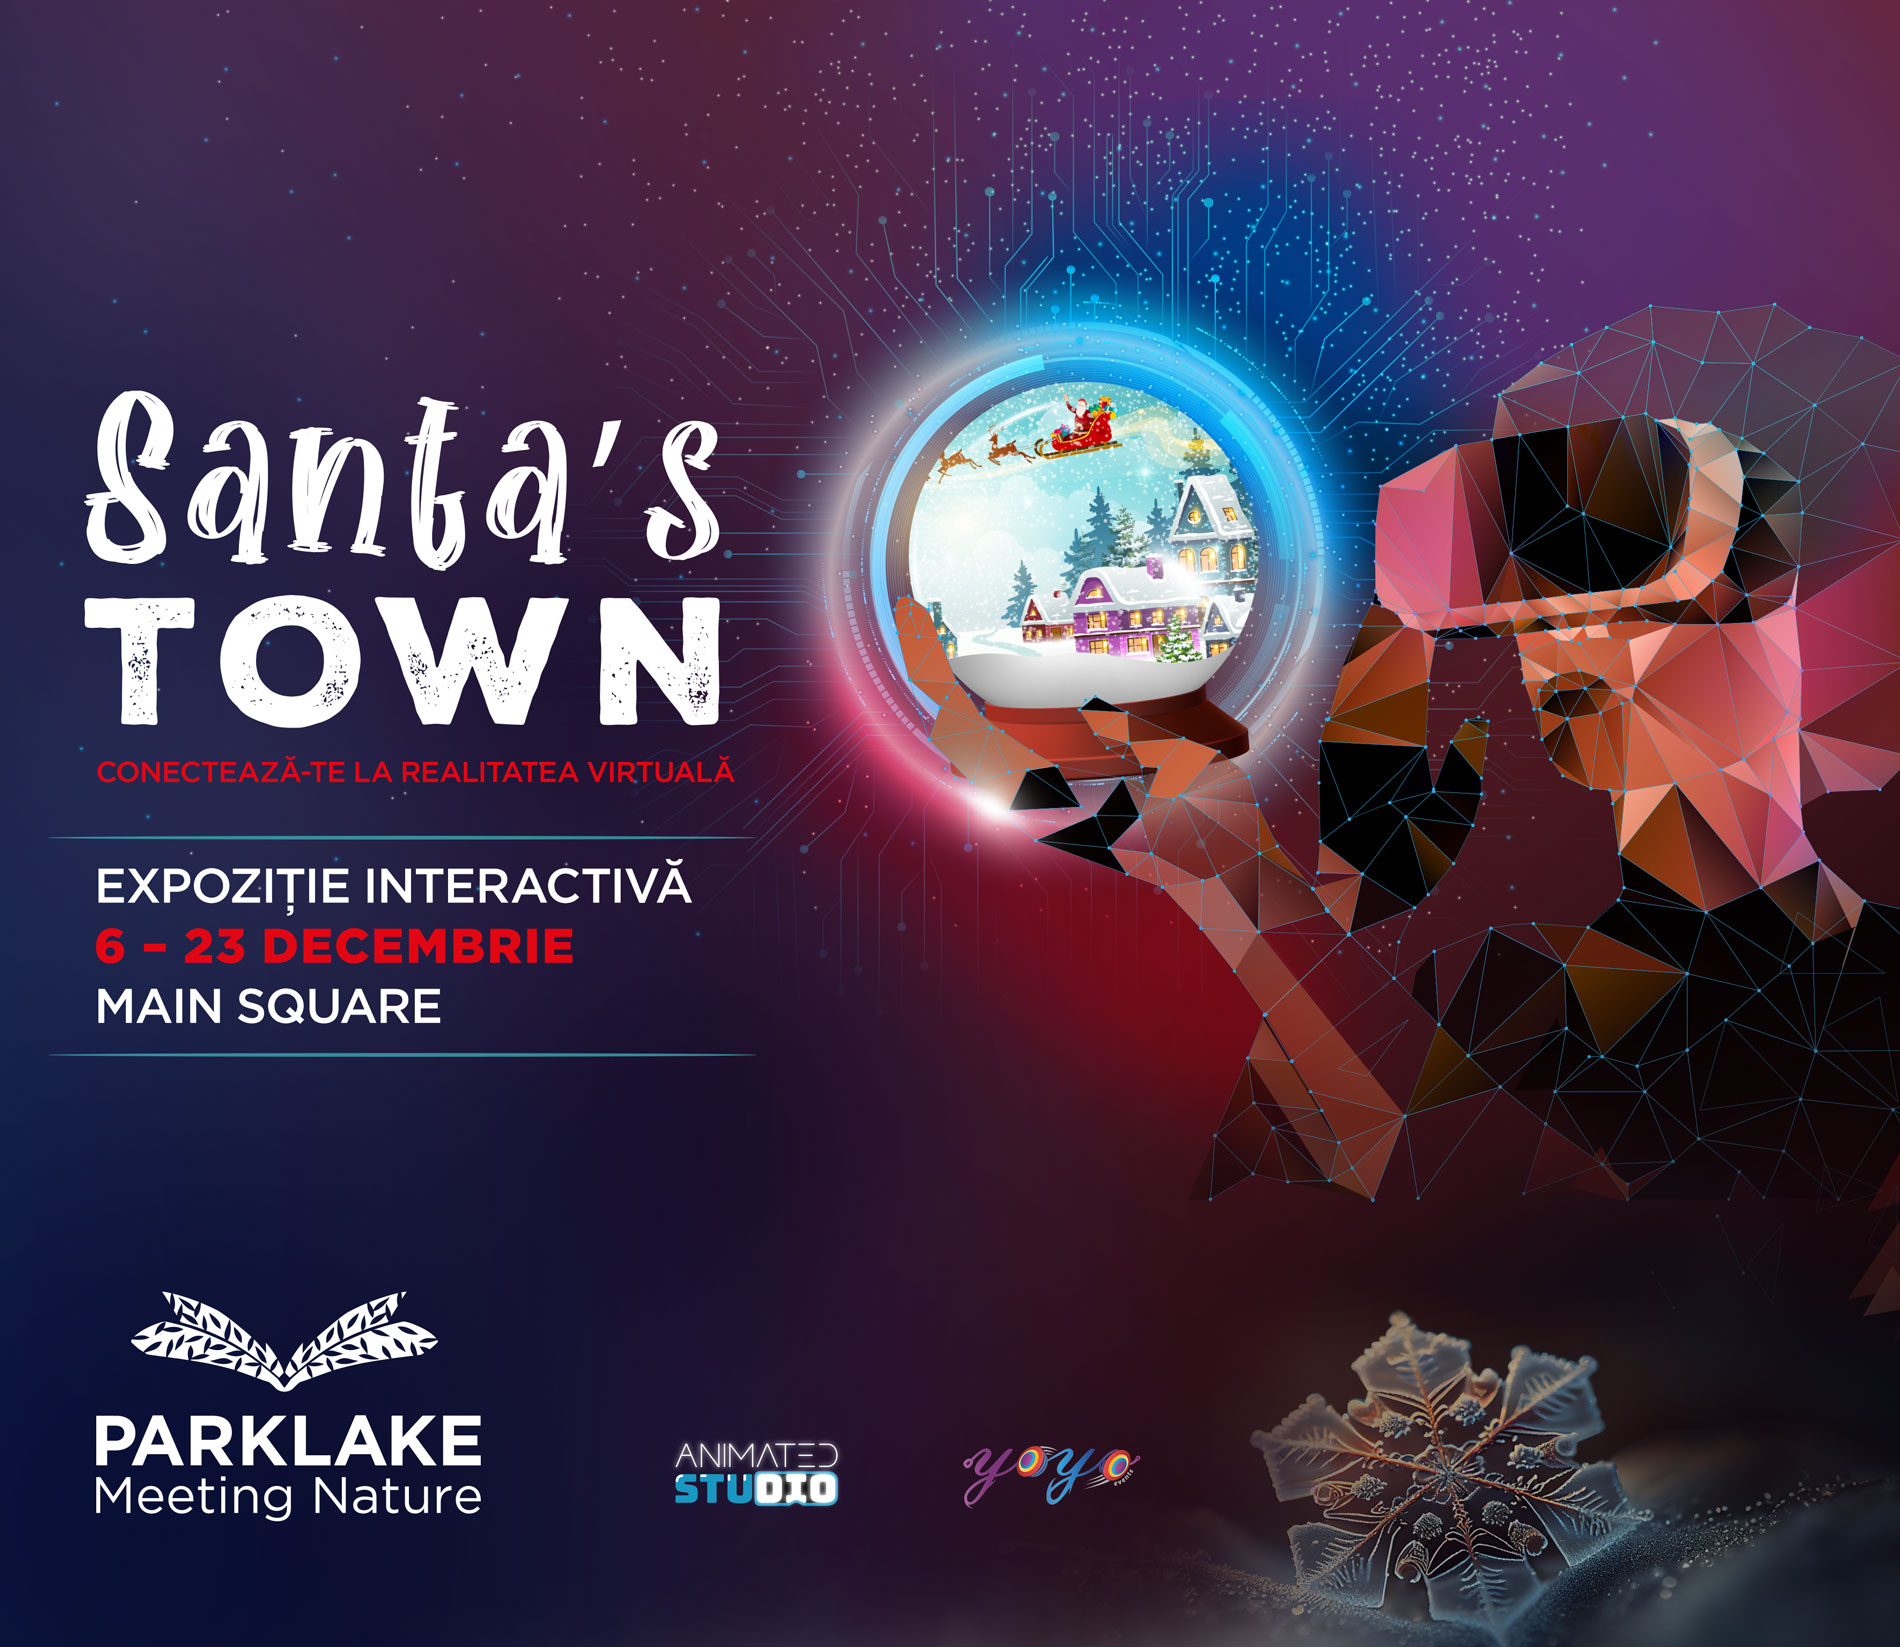 ParkLake se transforma in Santa’s Town